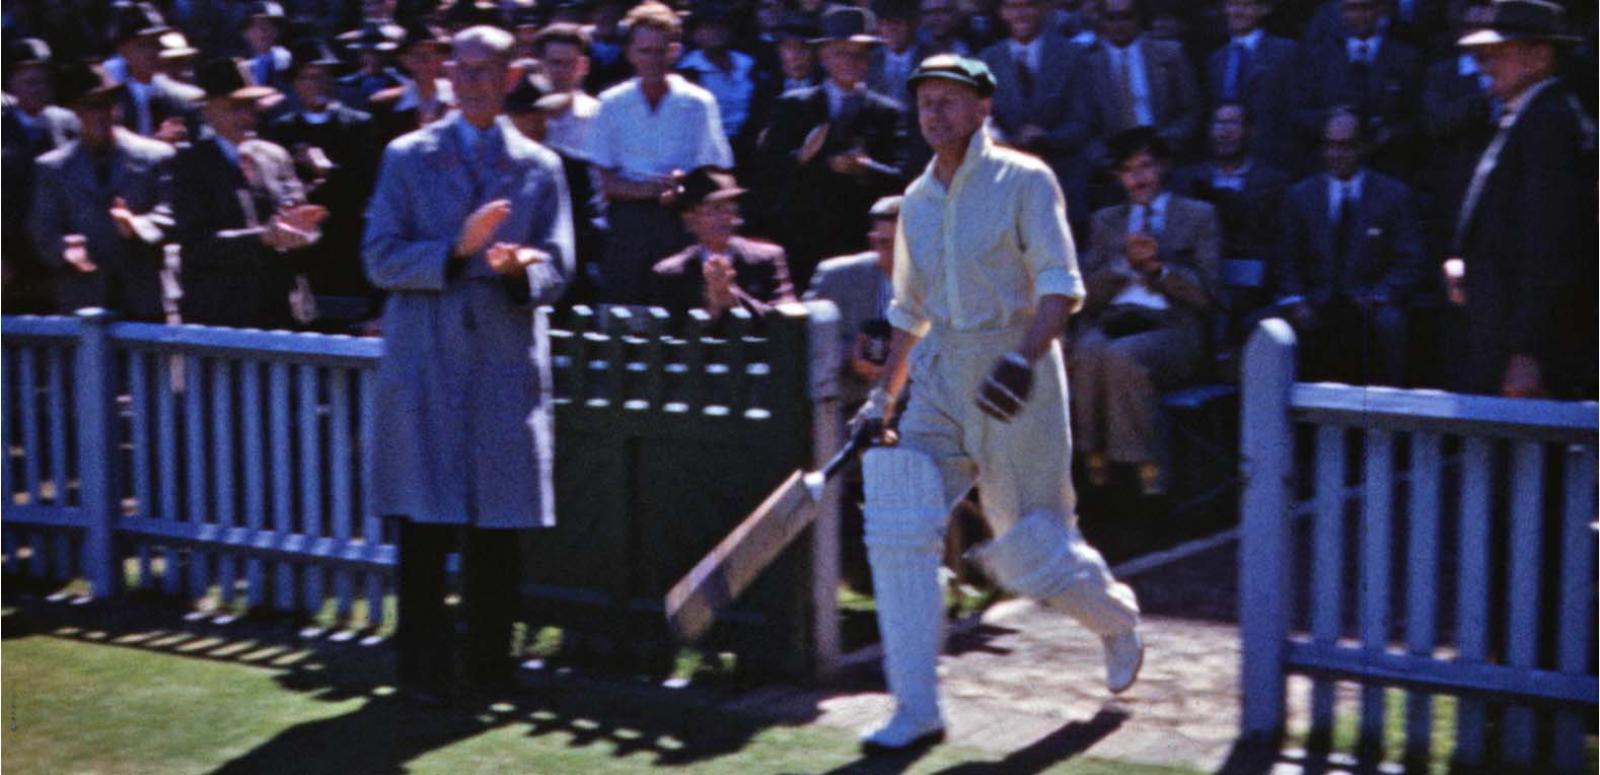 Cricketer Sir Donald Bradman walks onto the Sydney Cricket Ground ready to bat.